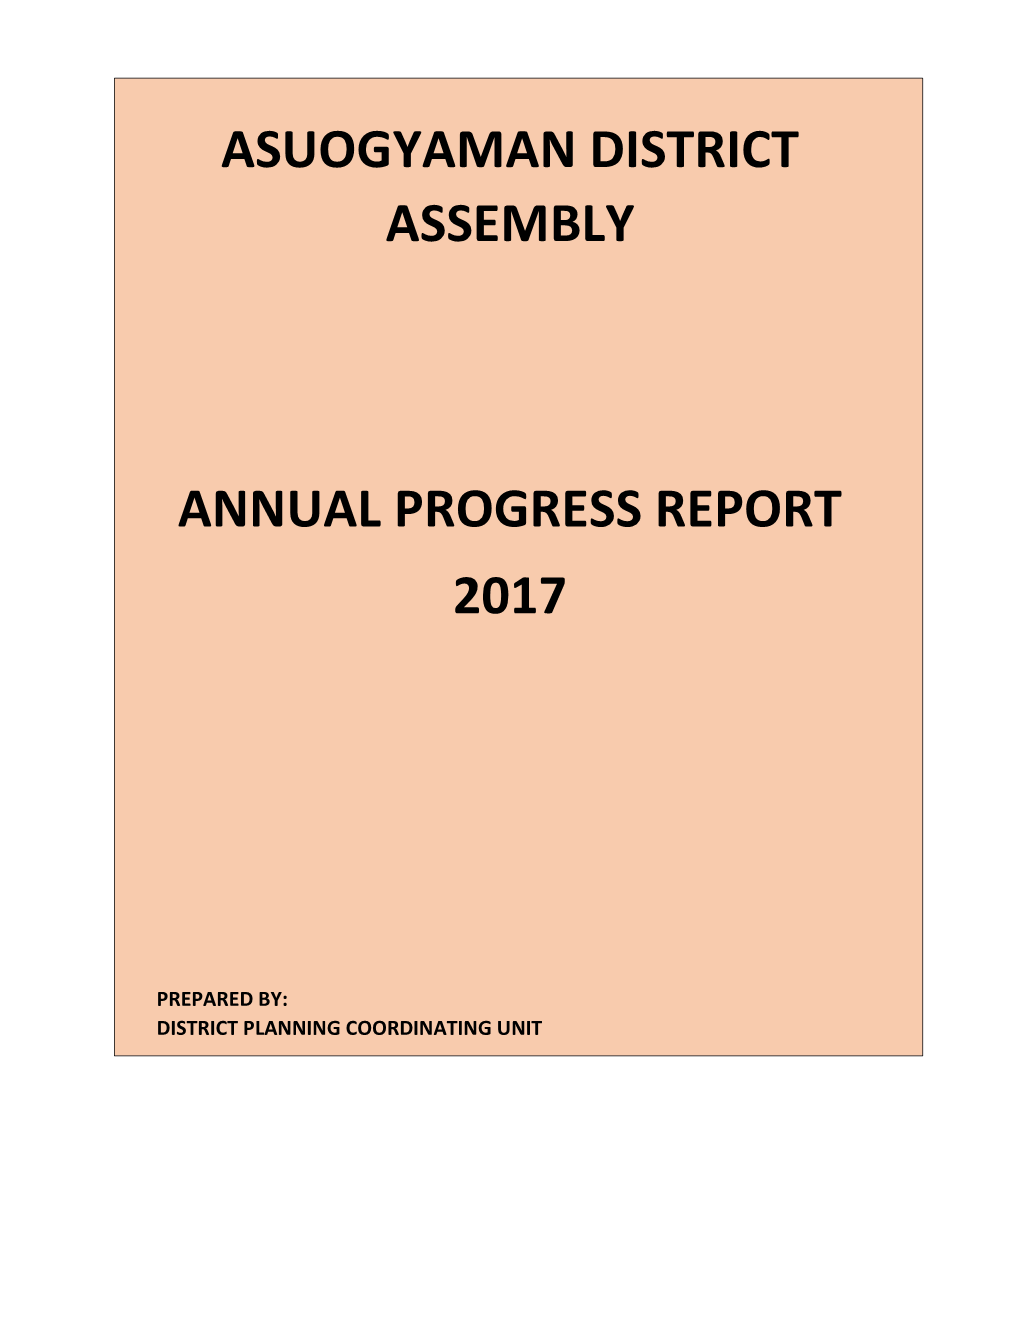 Asuogyaman District Assembly Annual Progress